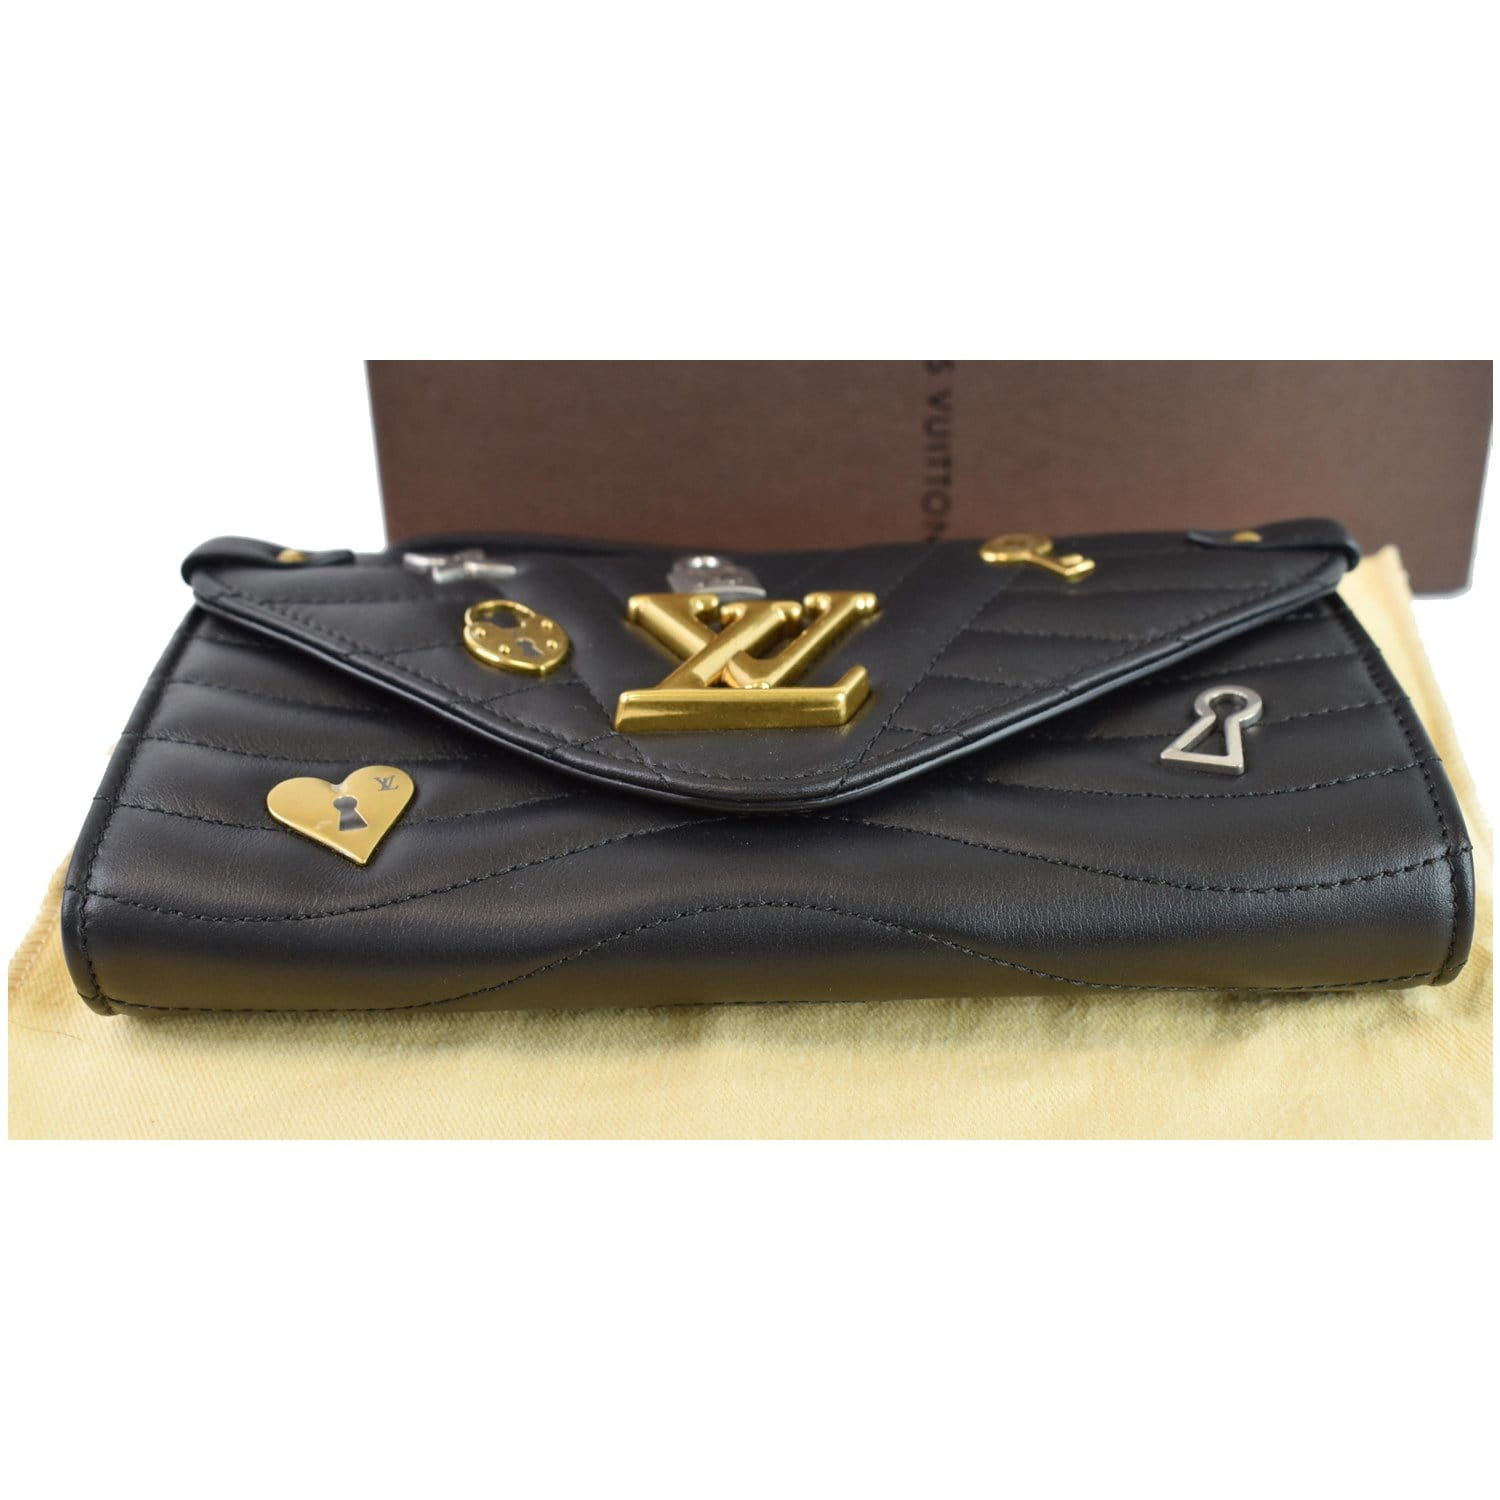 Louis Vuitton love lock heart bag charm, Luxury, Bags & Wallets on